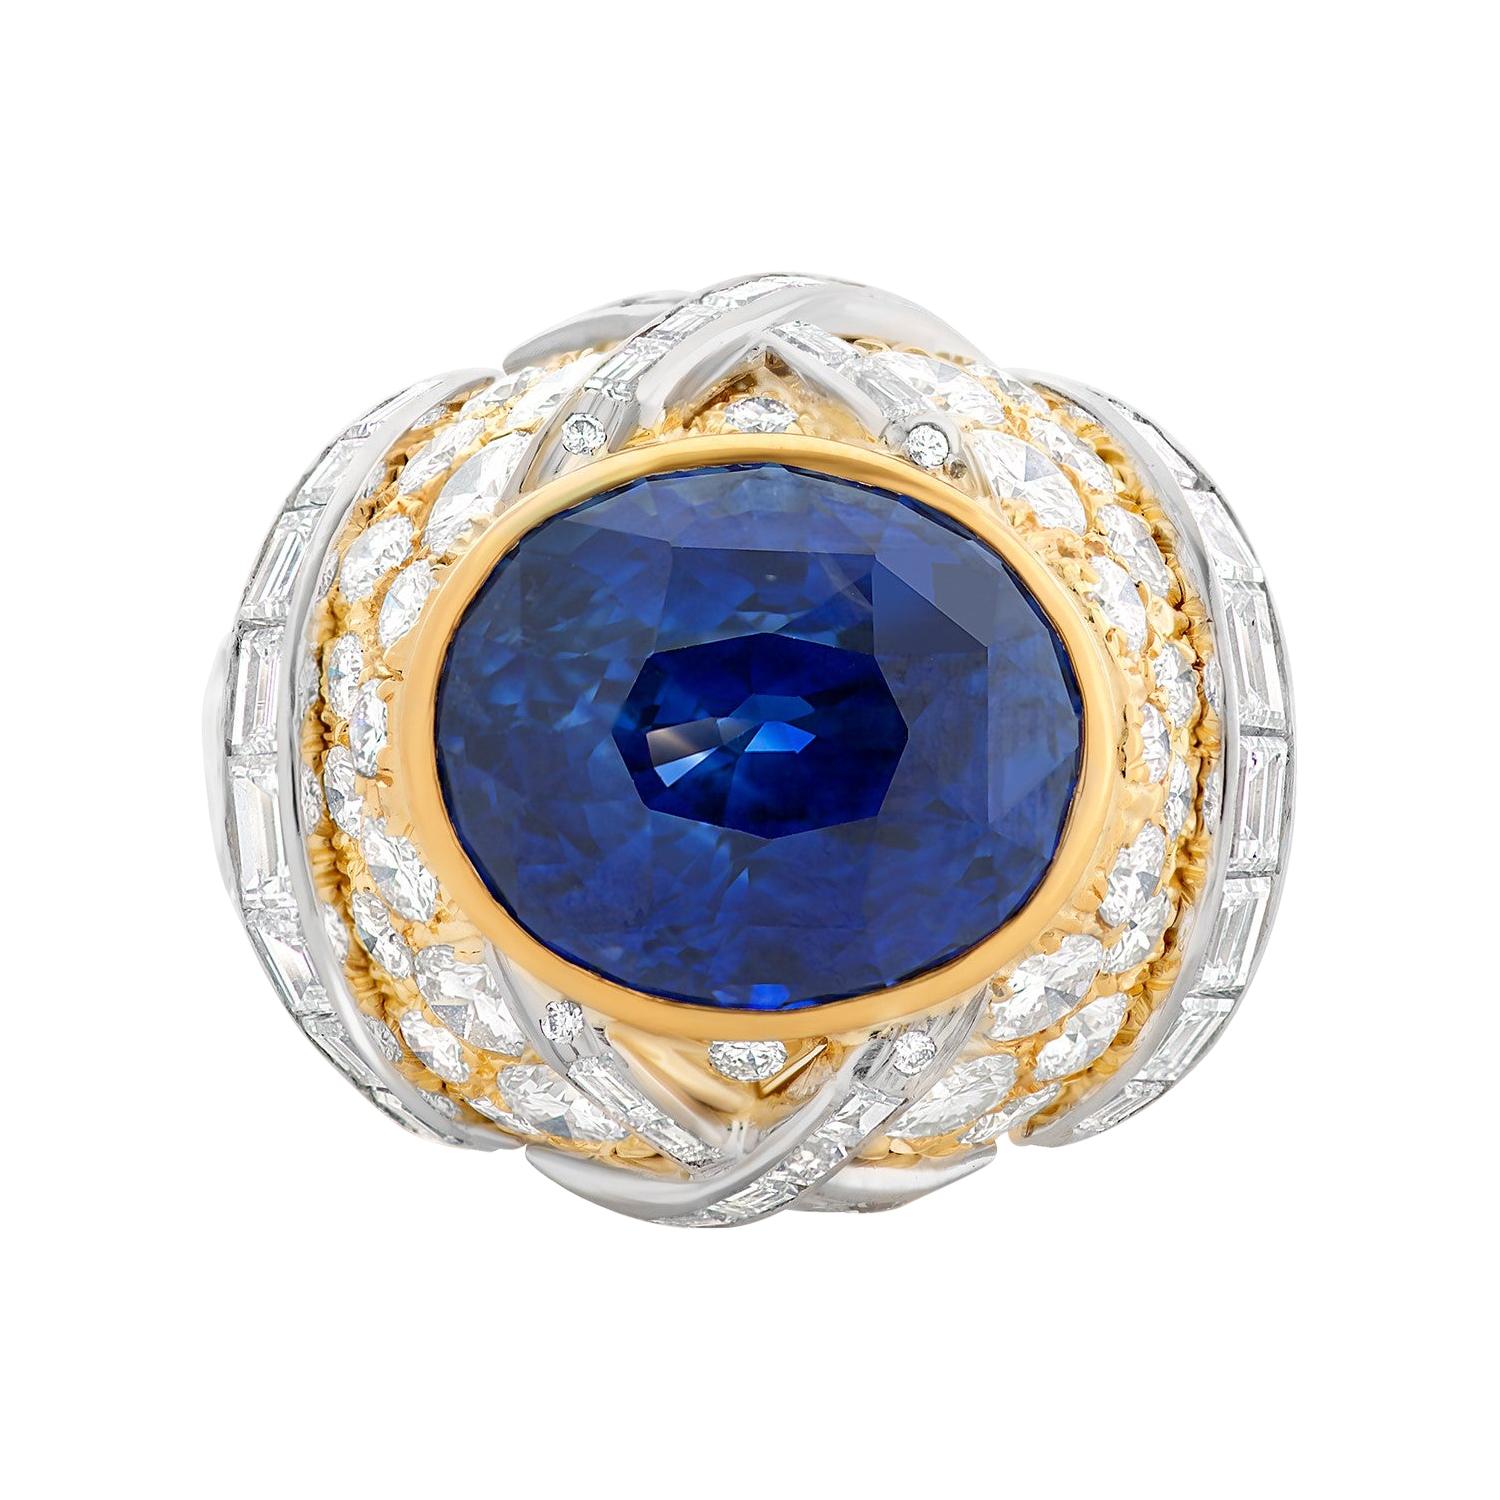 David Webb 16.62 Carat Oval Ceylon Sapphire and Diamond Ring in 18KYG & Platinum For Sale